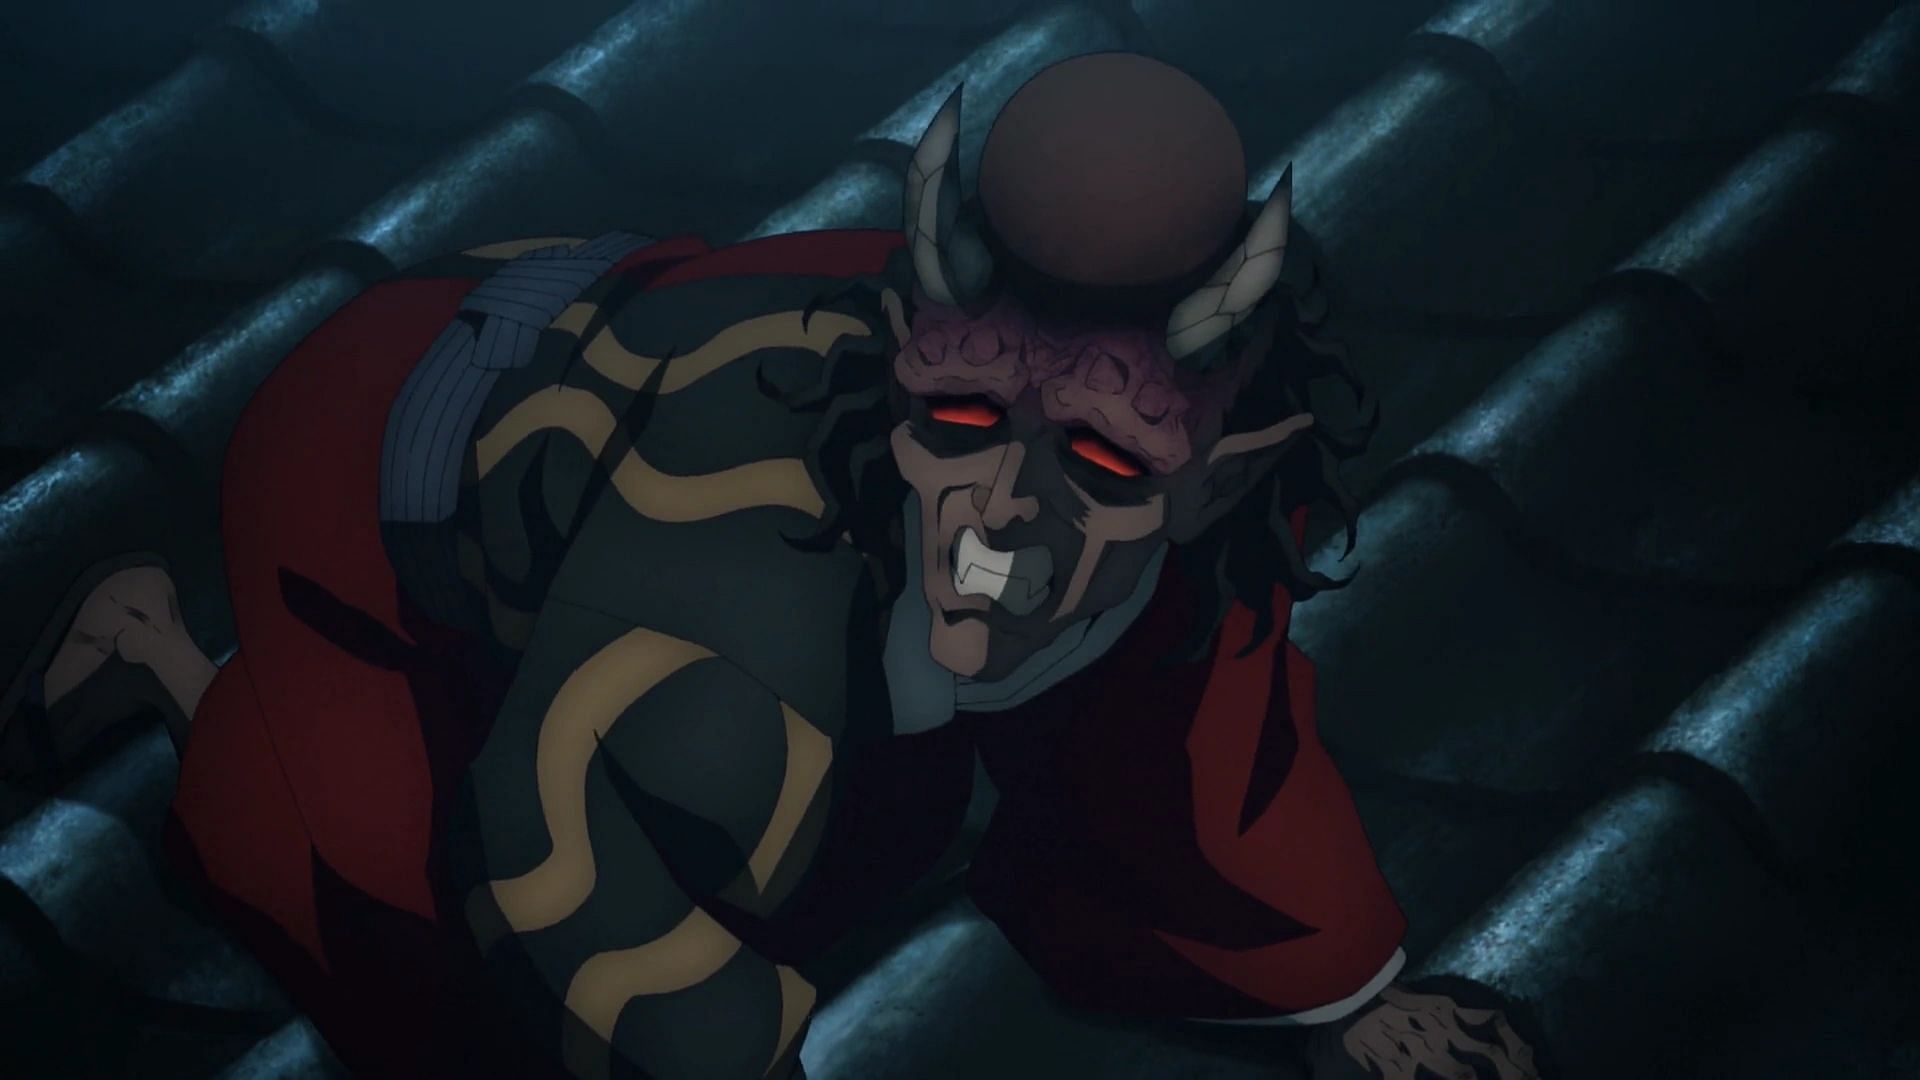 Demon Slayer: Swordsmith Village (Season 3) Gets Episode 11 (Finale)  Preview - Anime Corner